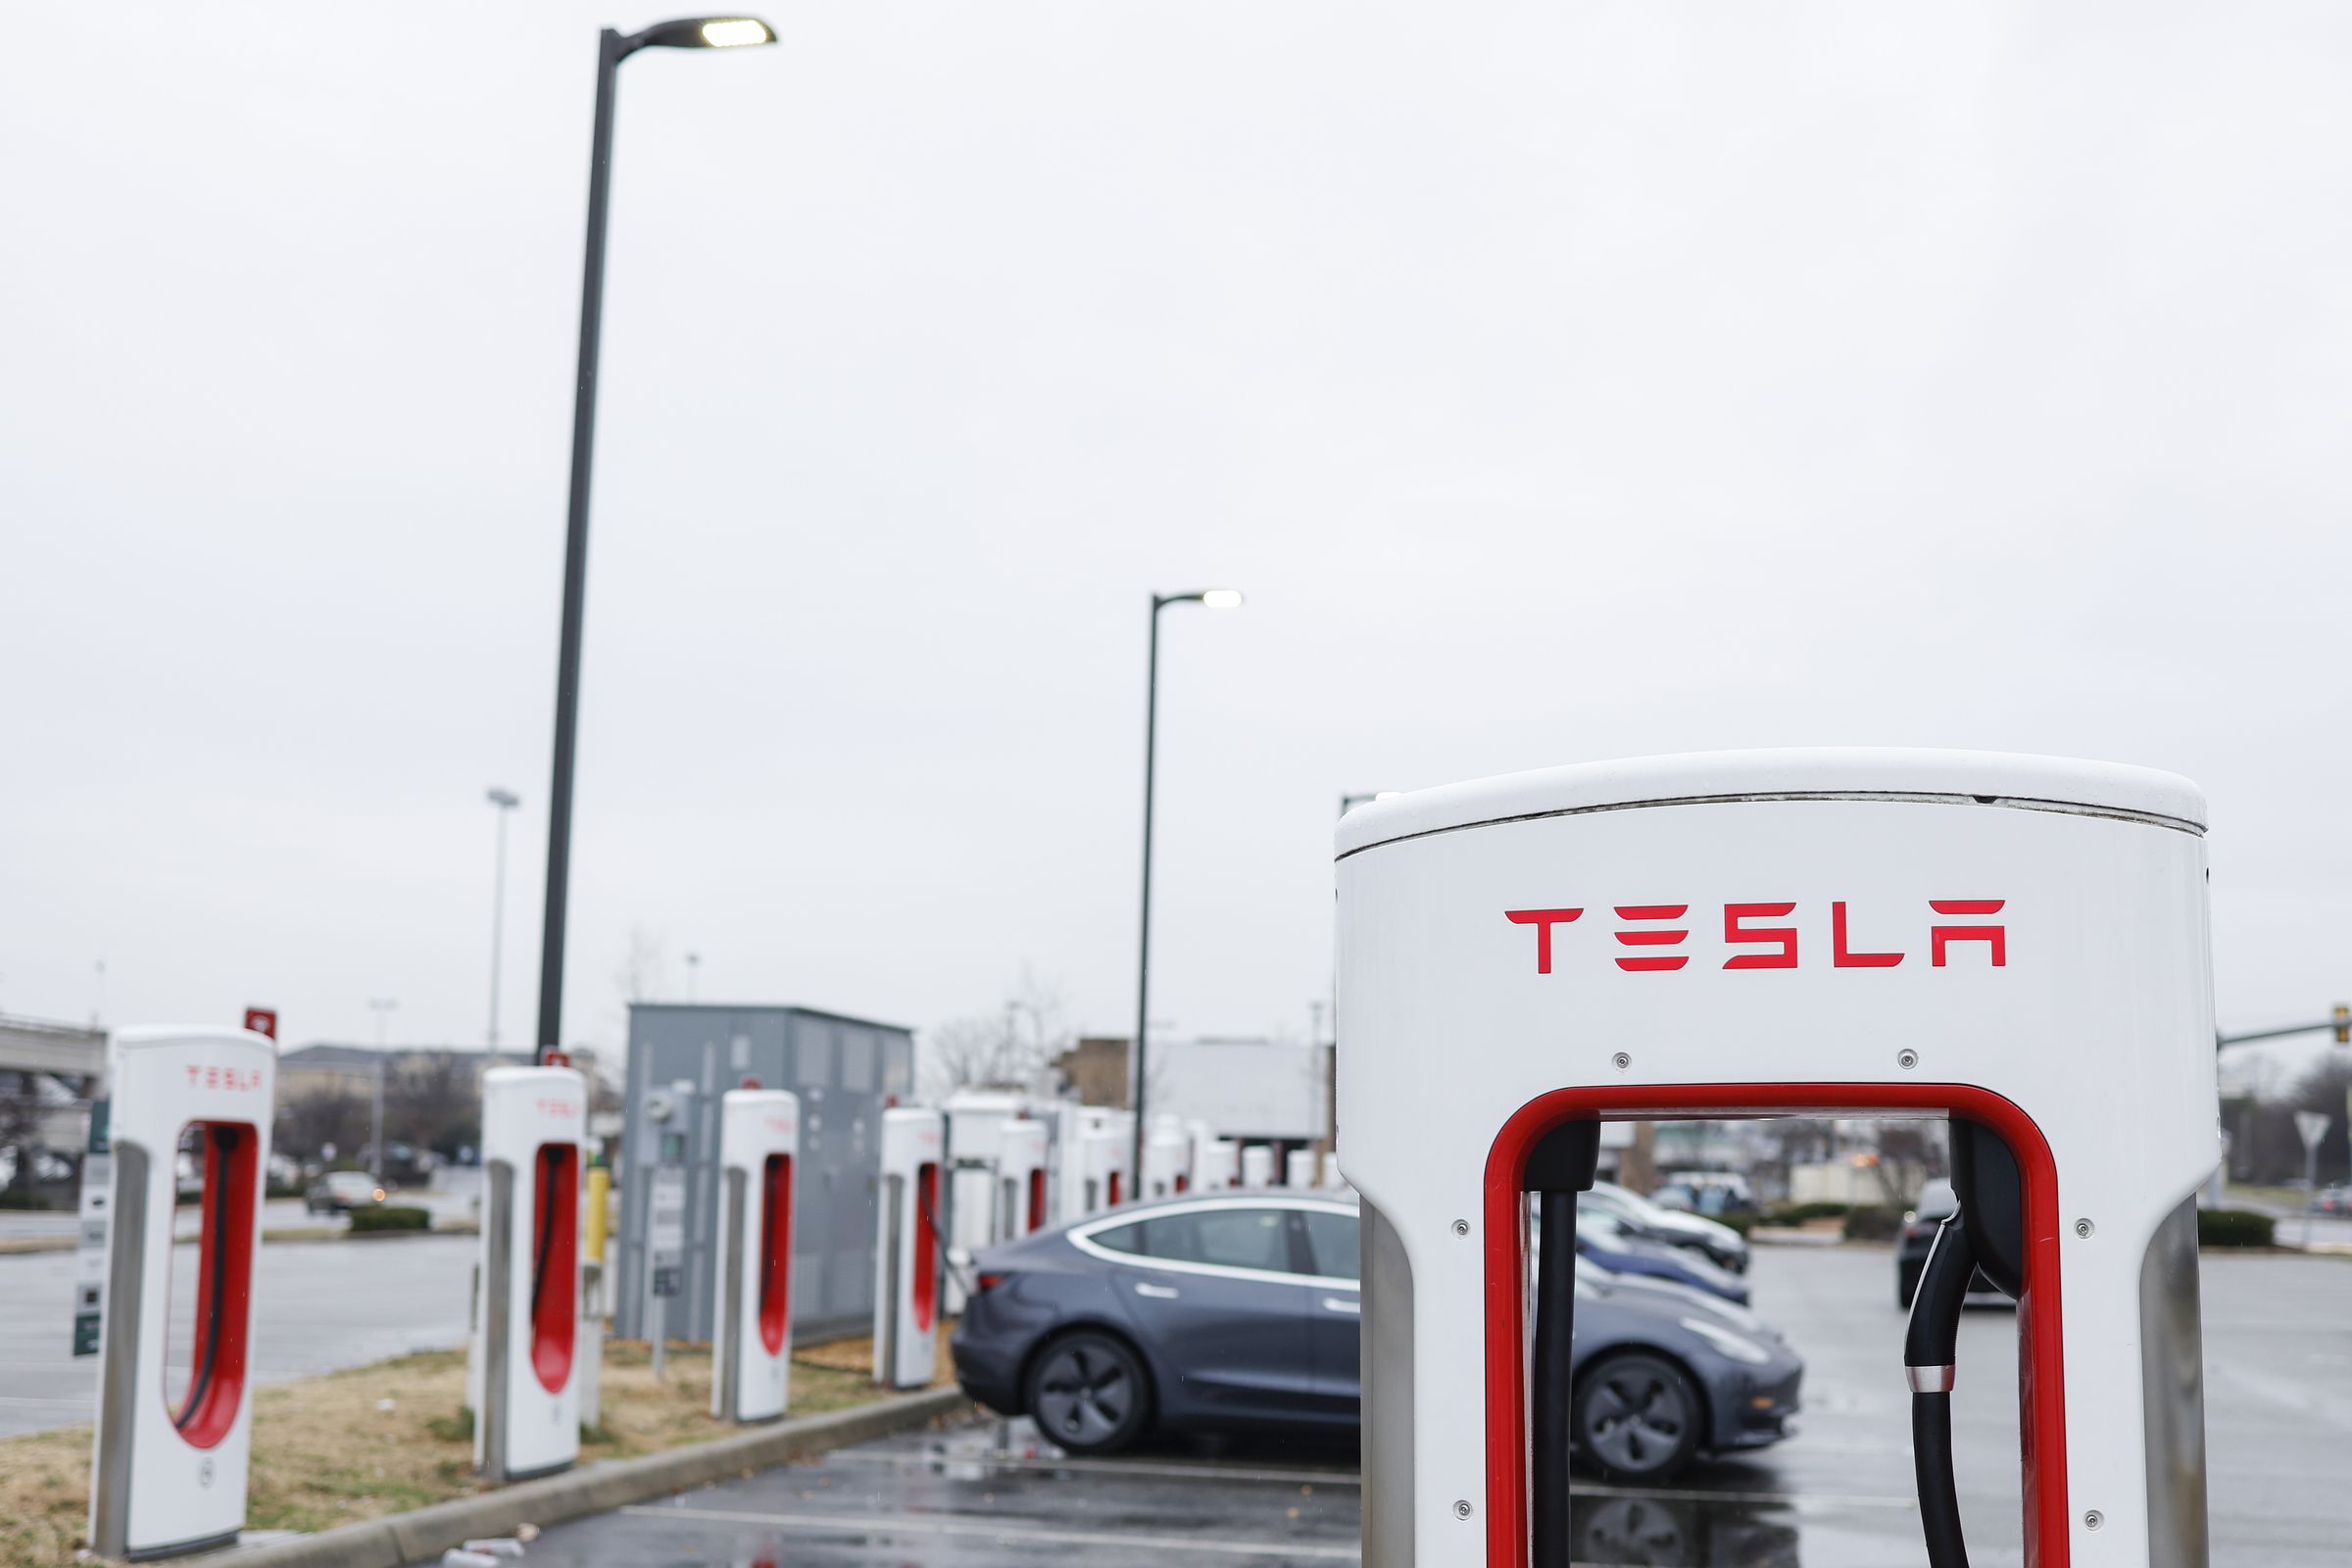 Tesla Supercharger in Virginia